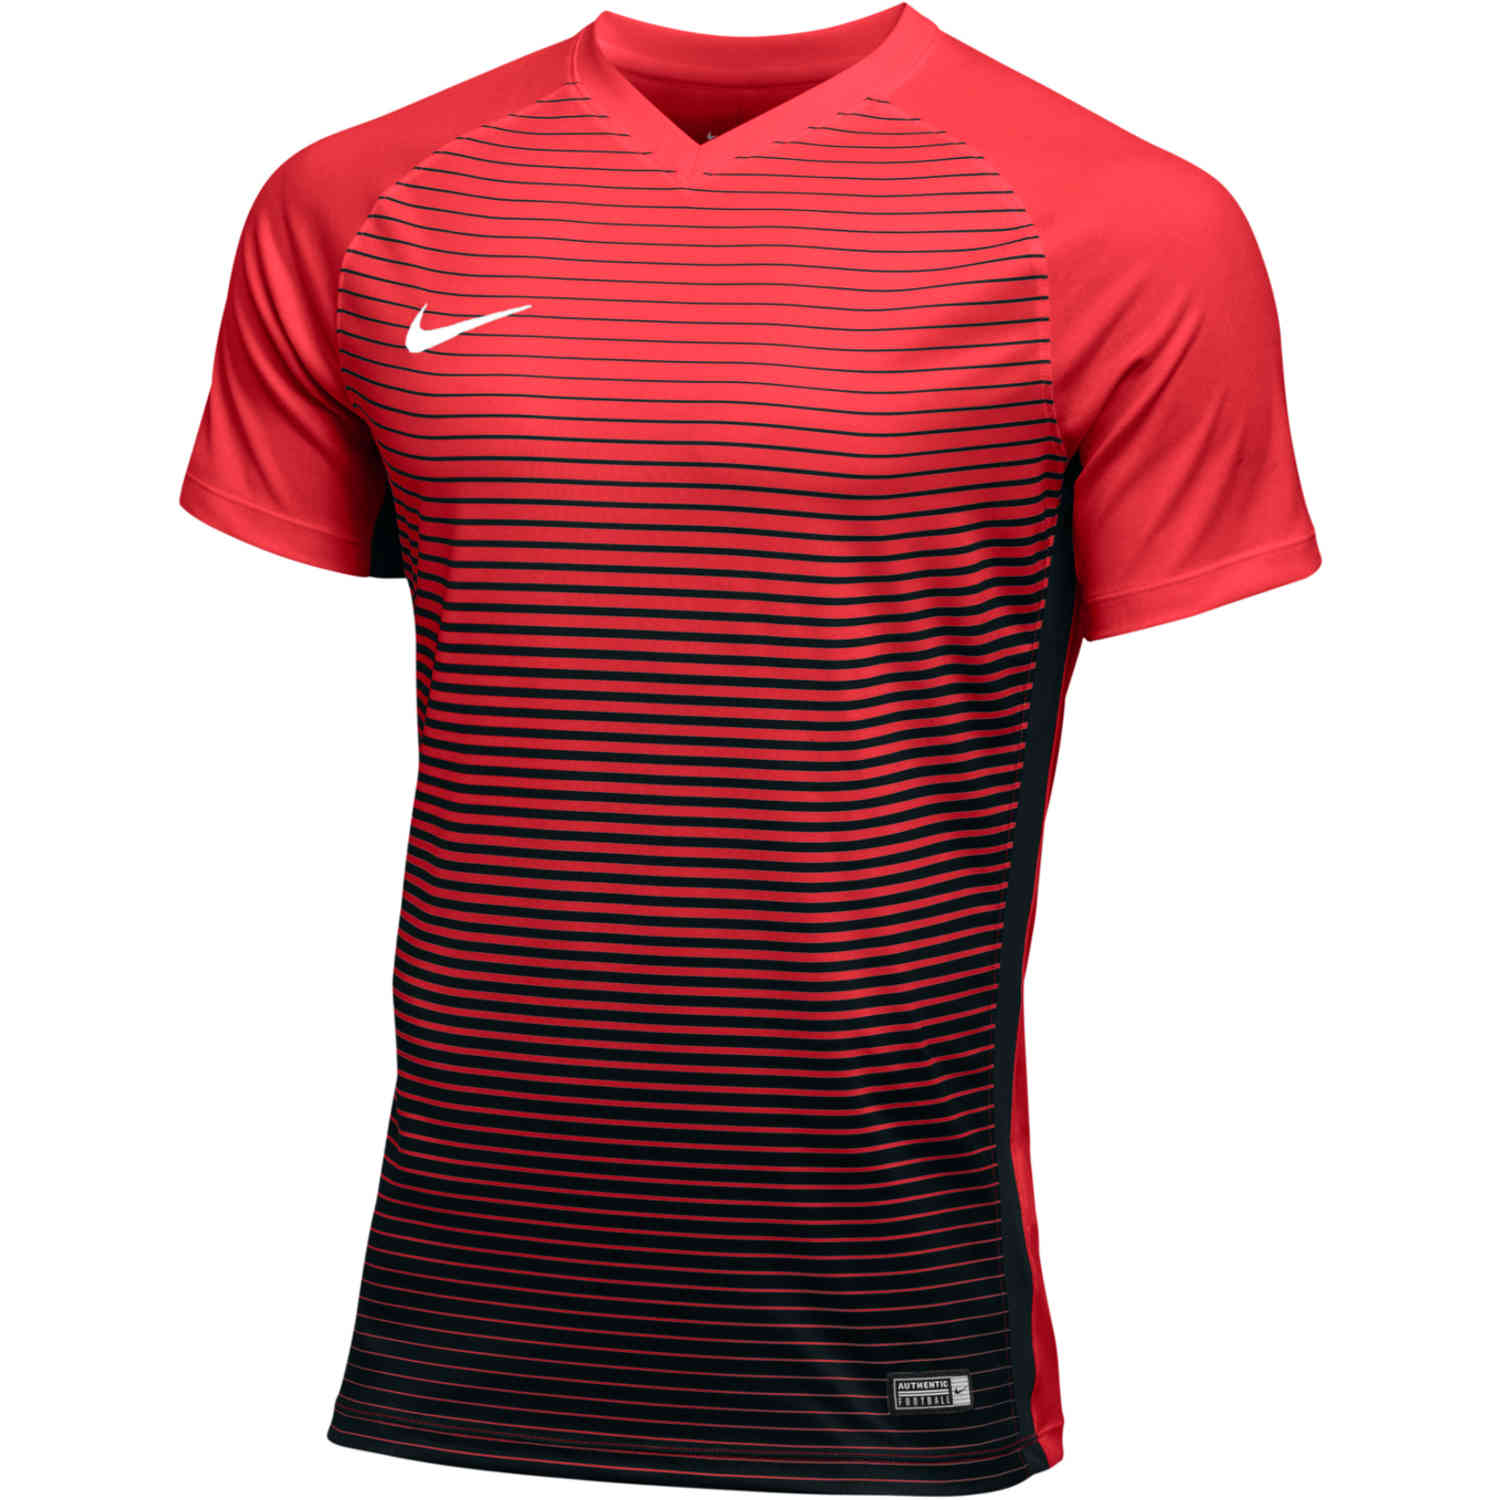 Nike Precision IV Jersey - University Red/Black - SoccerPro